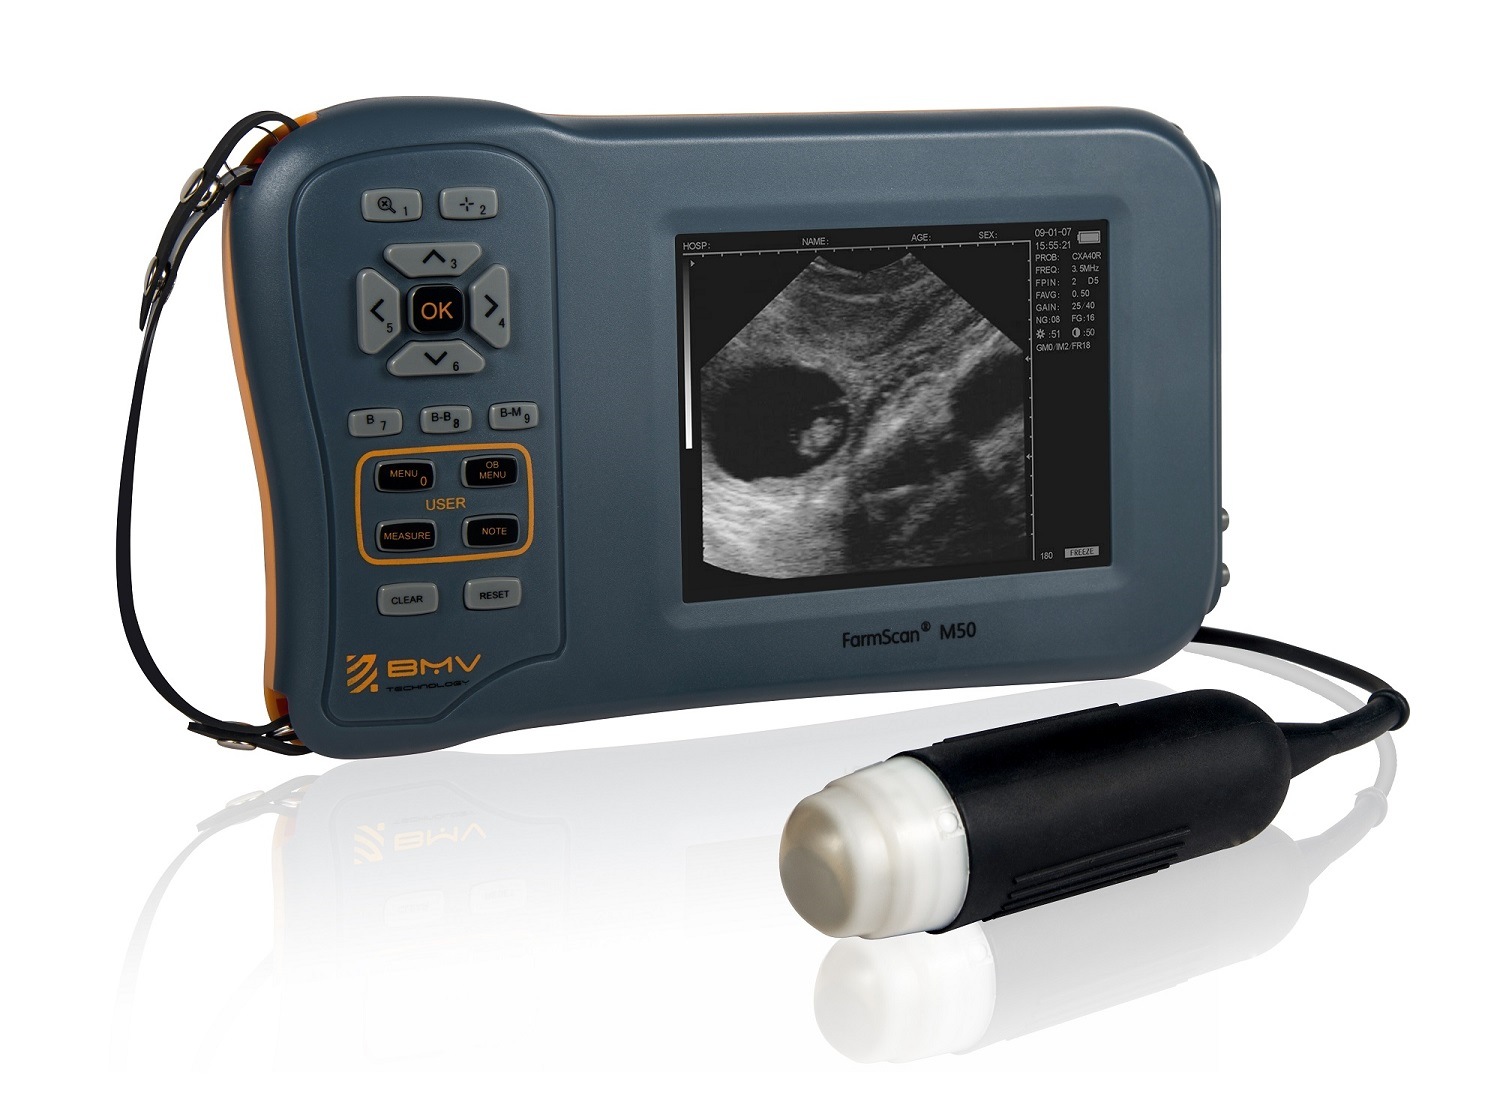 Handheld &Portable Veterinary Medical Ultrasound Equipment (Farmscan M50)